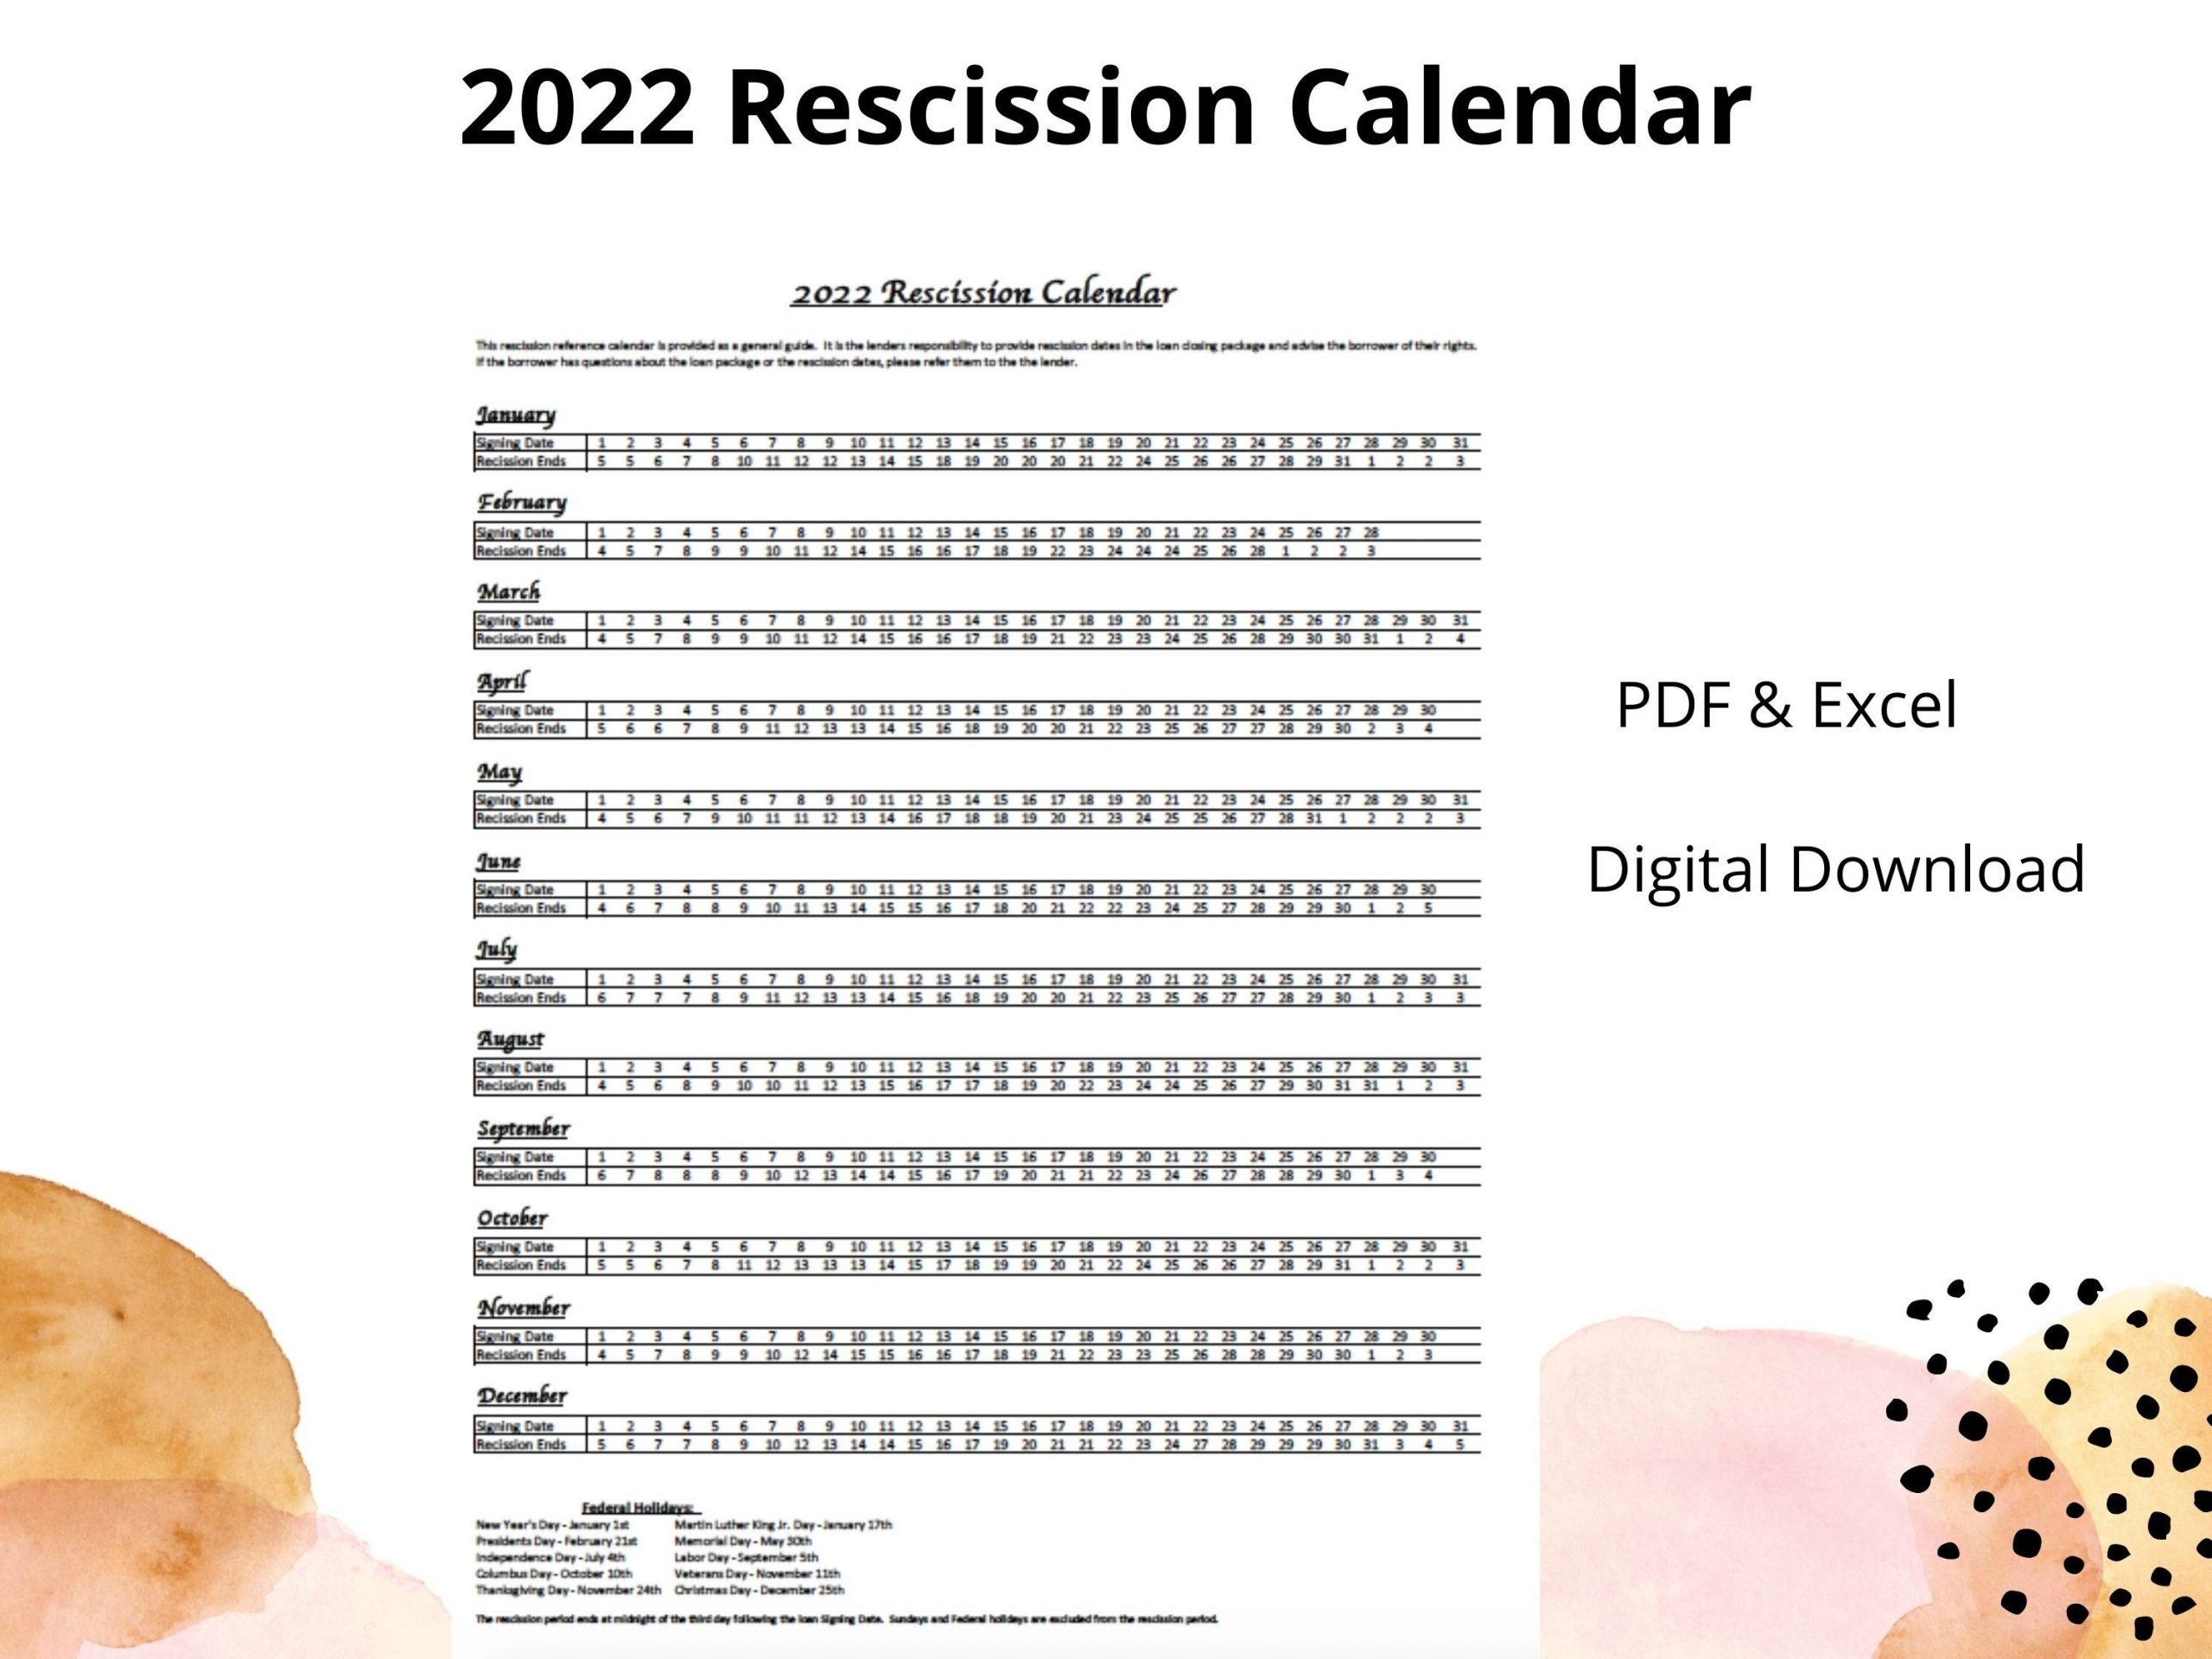 2022 Rescission Calendar For Loan Signing Agents Business